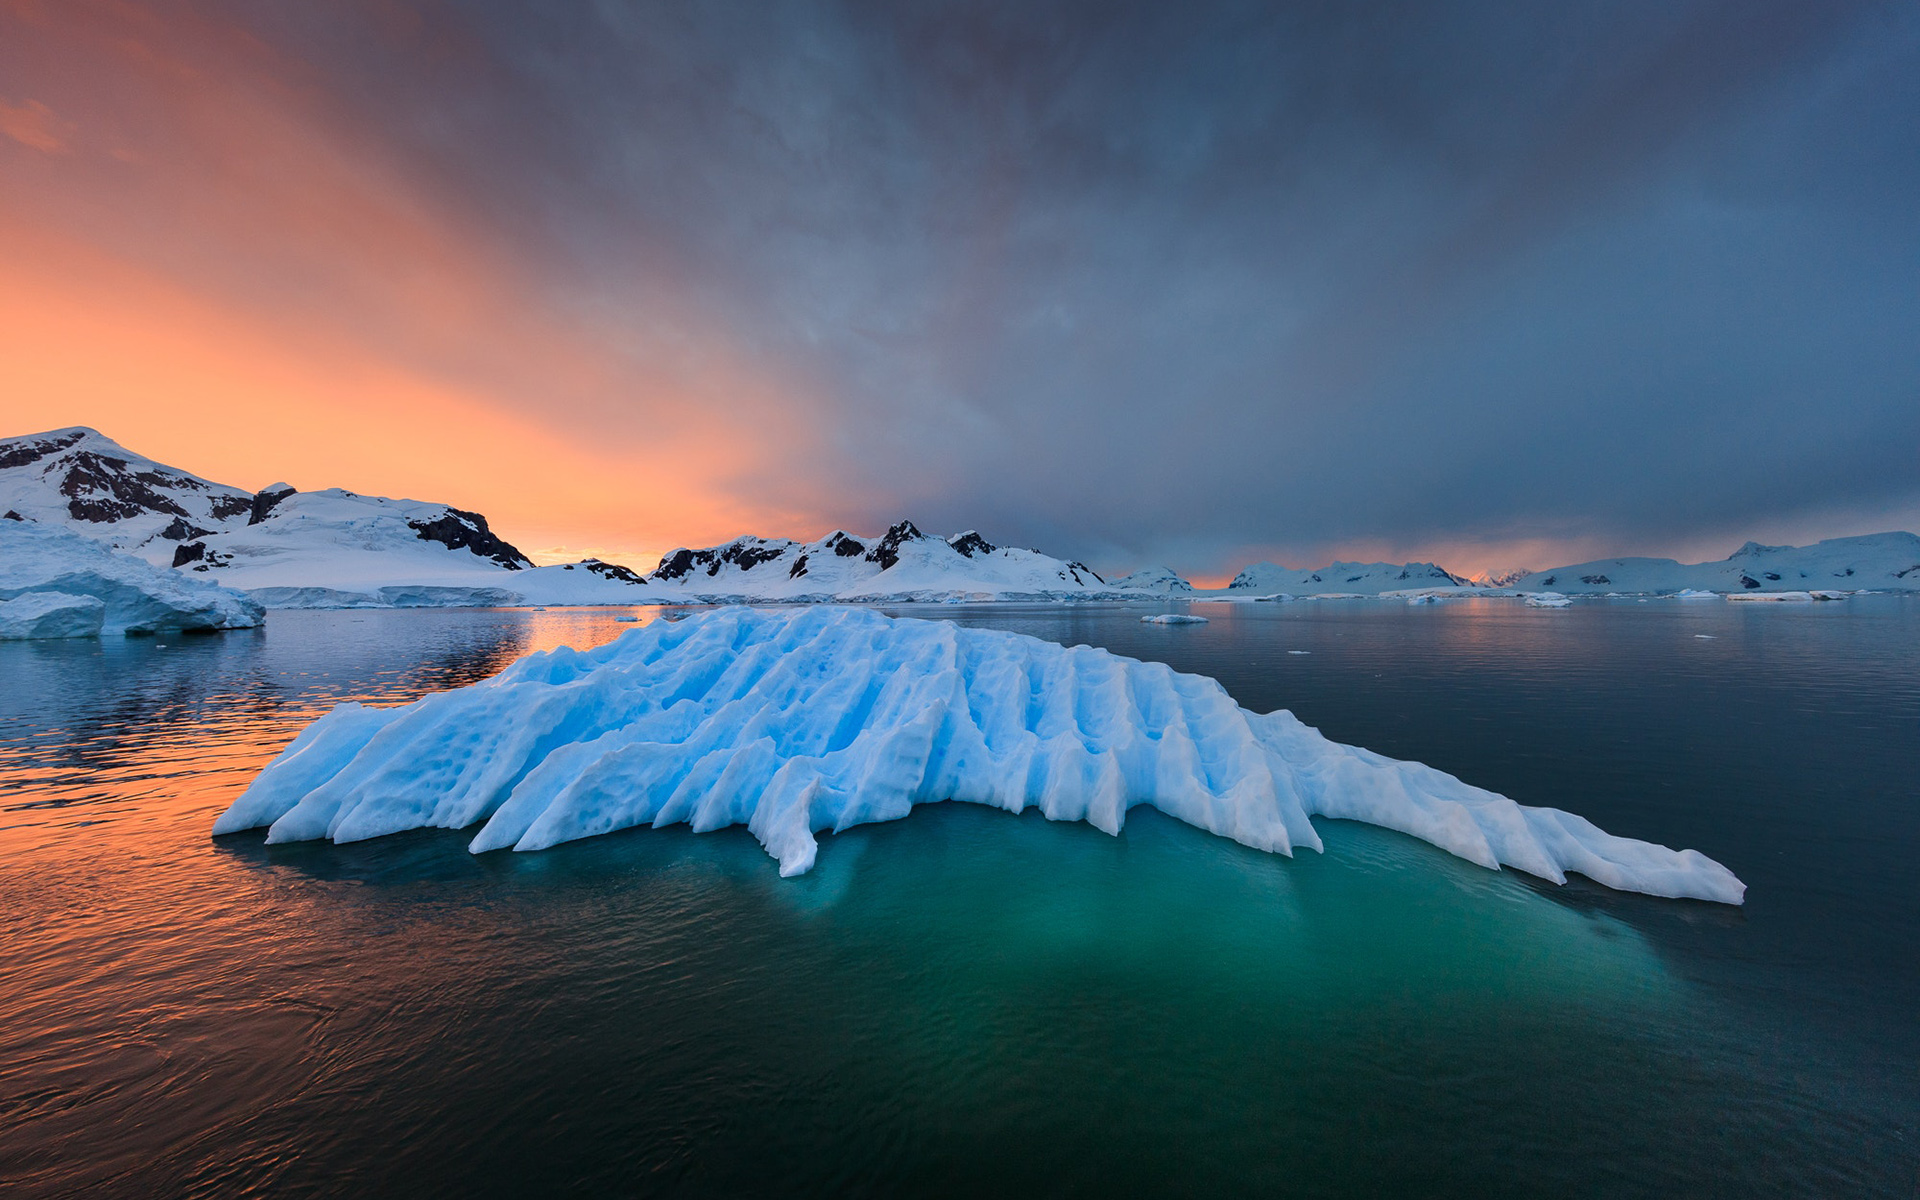 Ледовитый океан видео. Арктика Северный Ледовитый океан. Антарктида Гренландия Арктика Северный Ледовитый океан. Ледник Росса в Антарктиде. Северный Ледовитый океан и Антарктида.